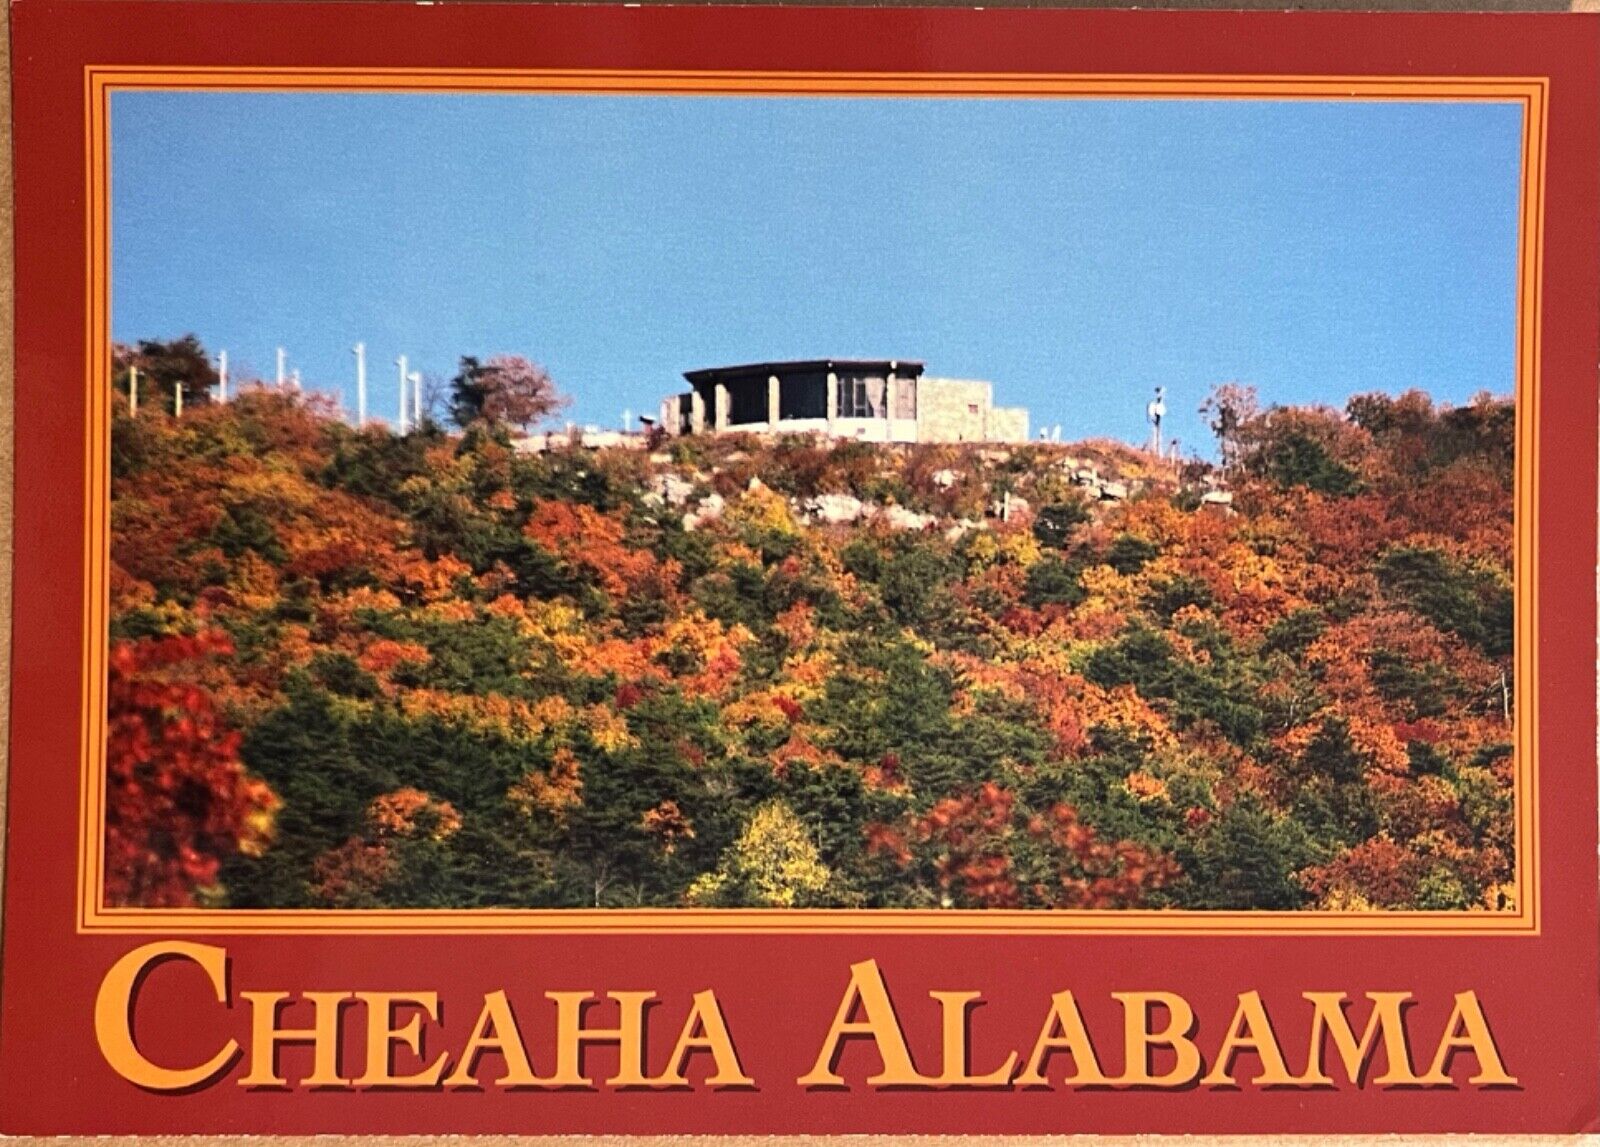 Cheaha Restaurant Alabama Scenic 6x4 Postcard